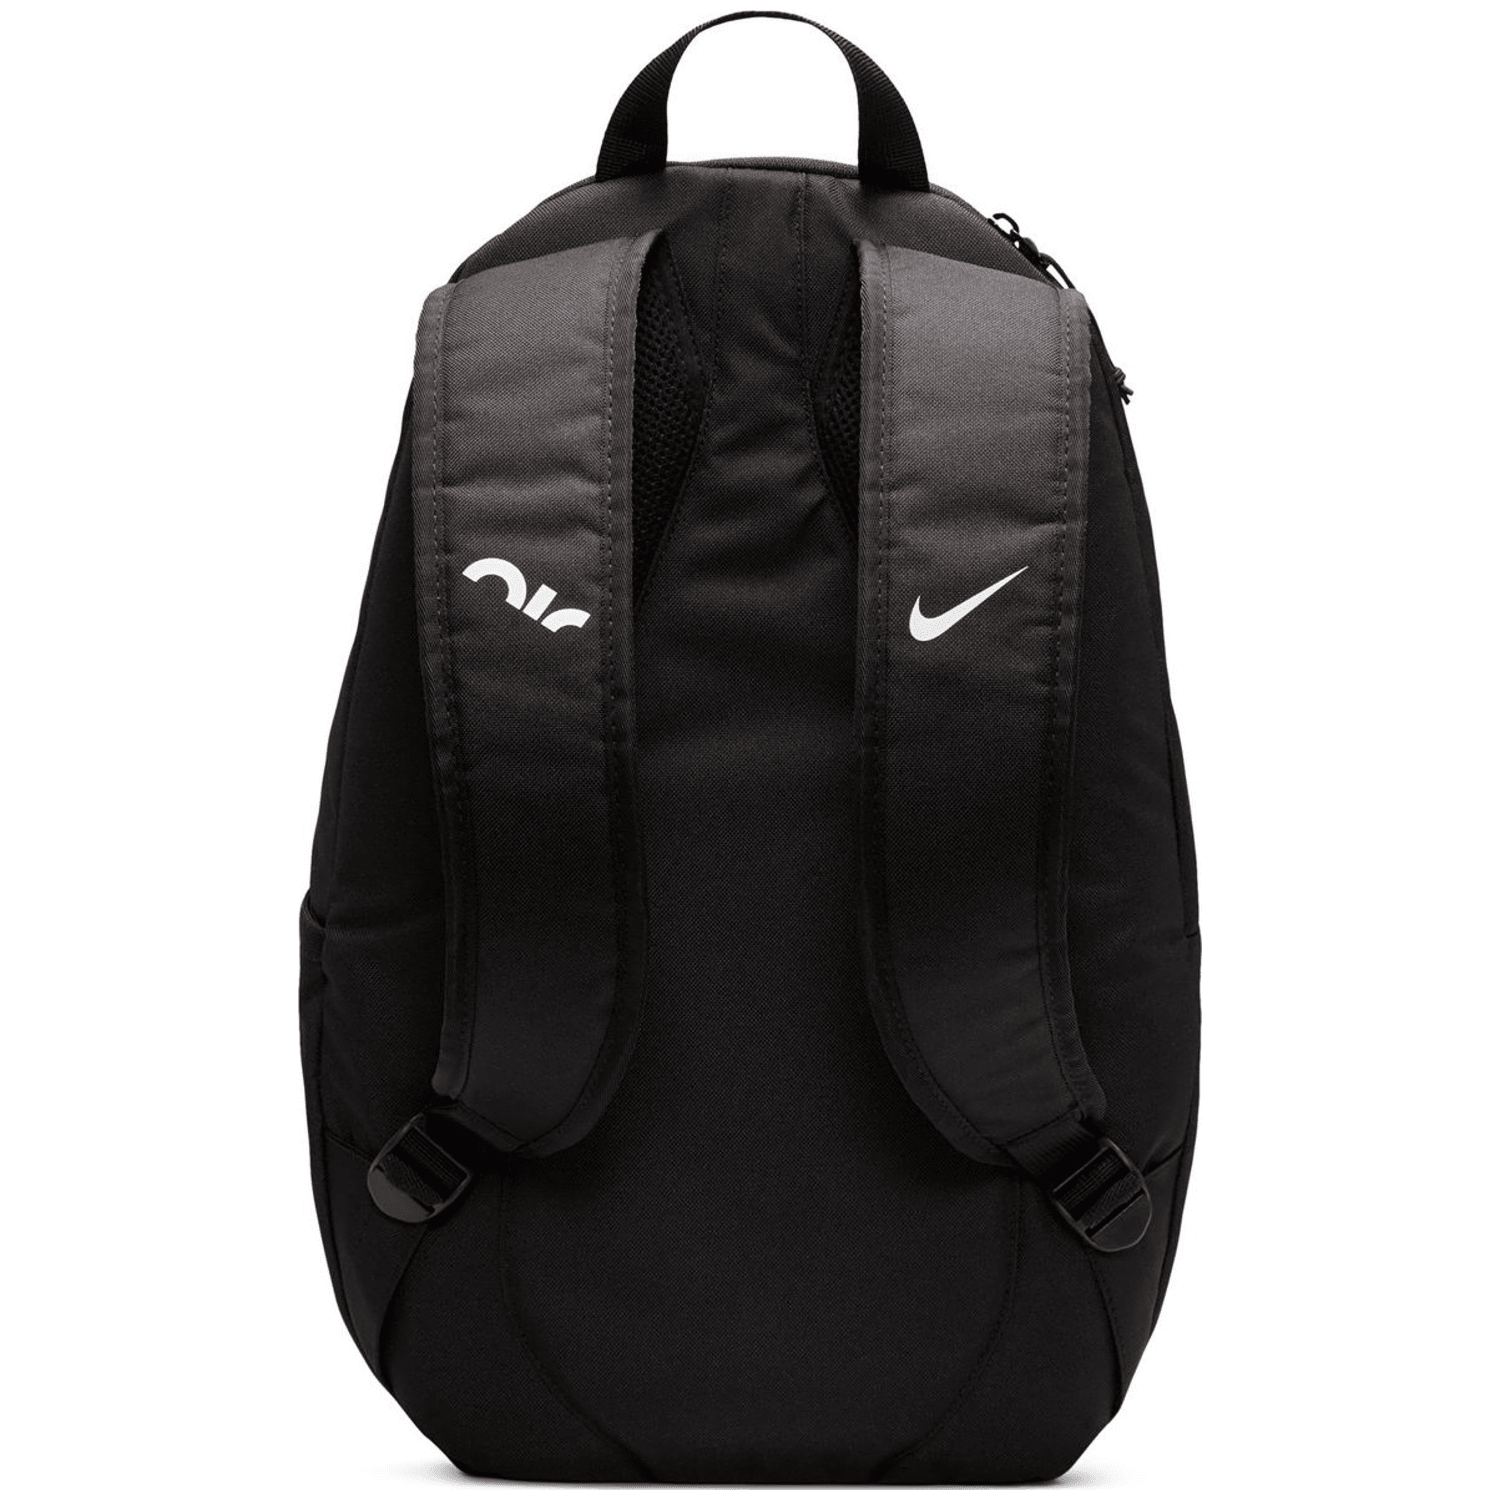 Nike Air GRX Unisex Daybag